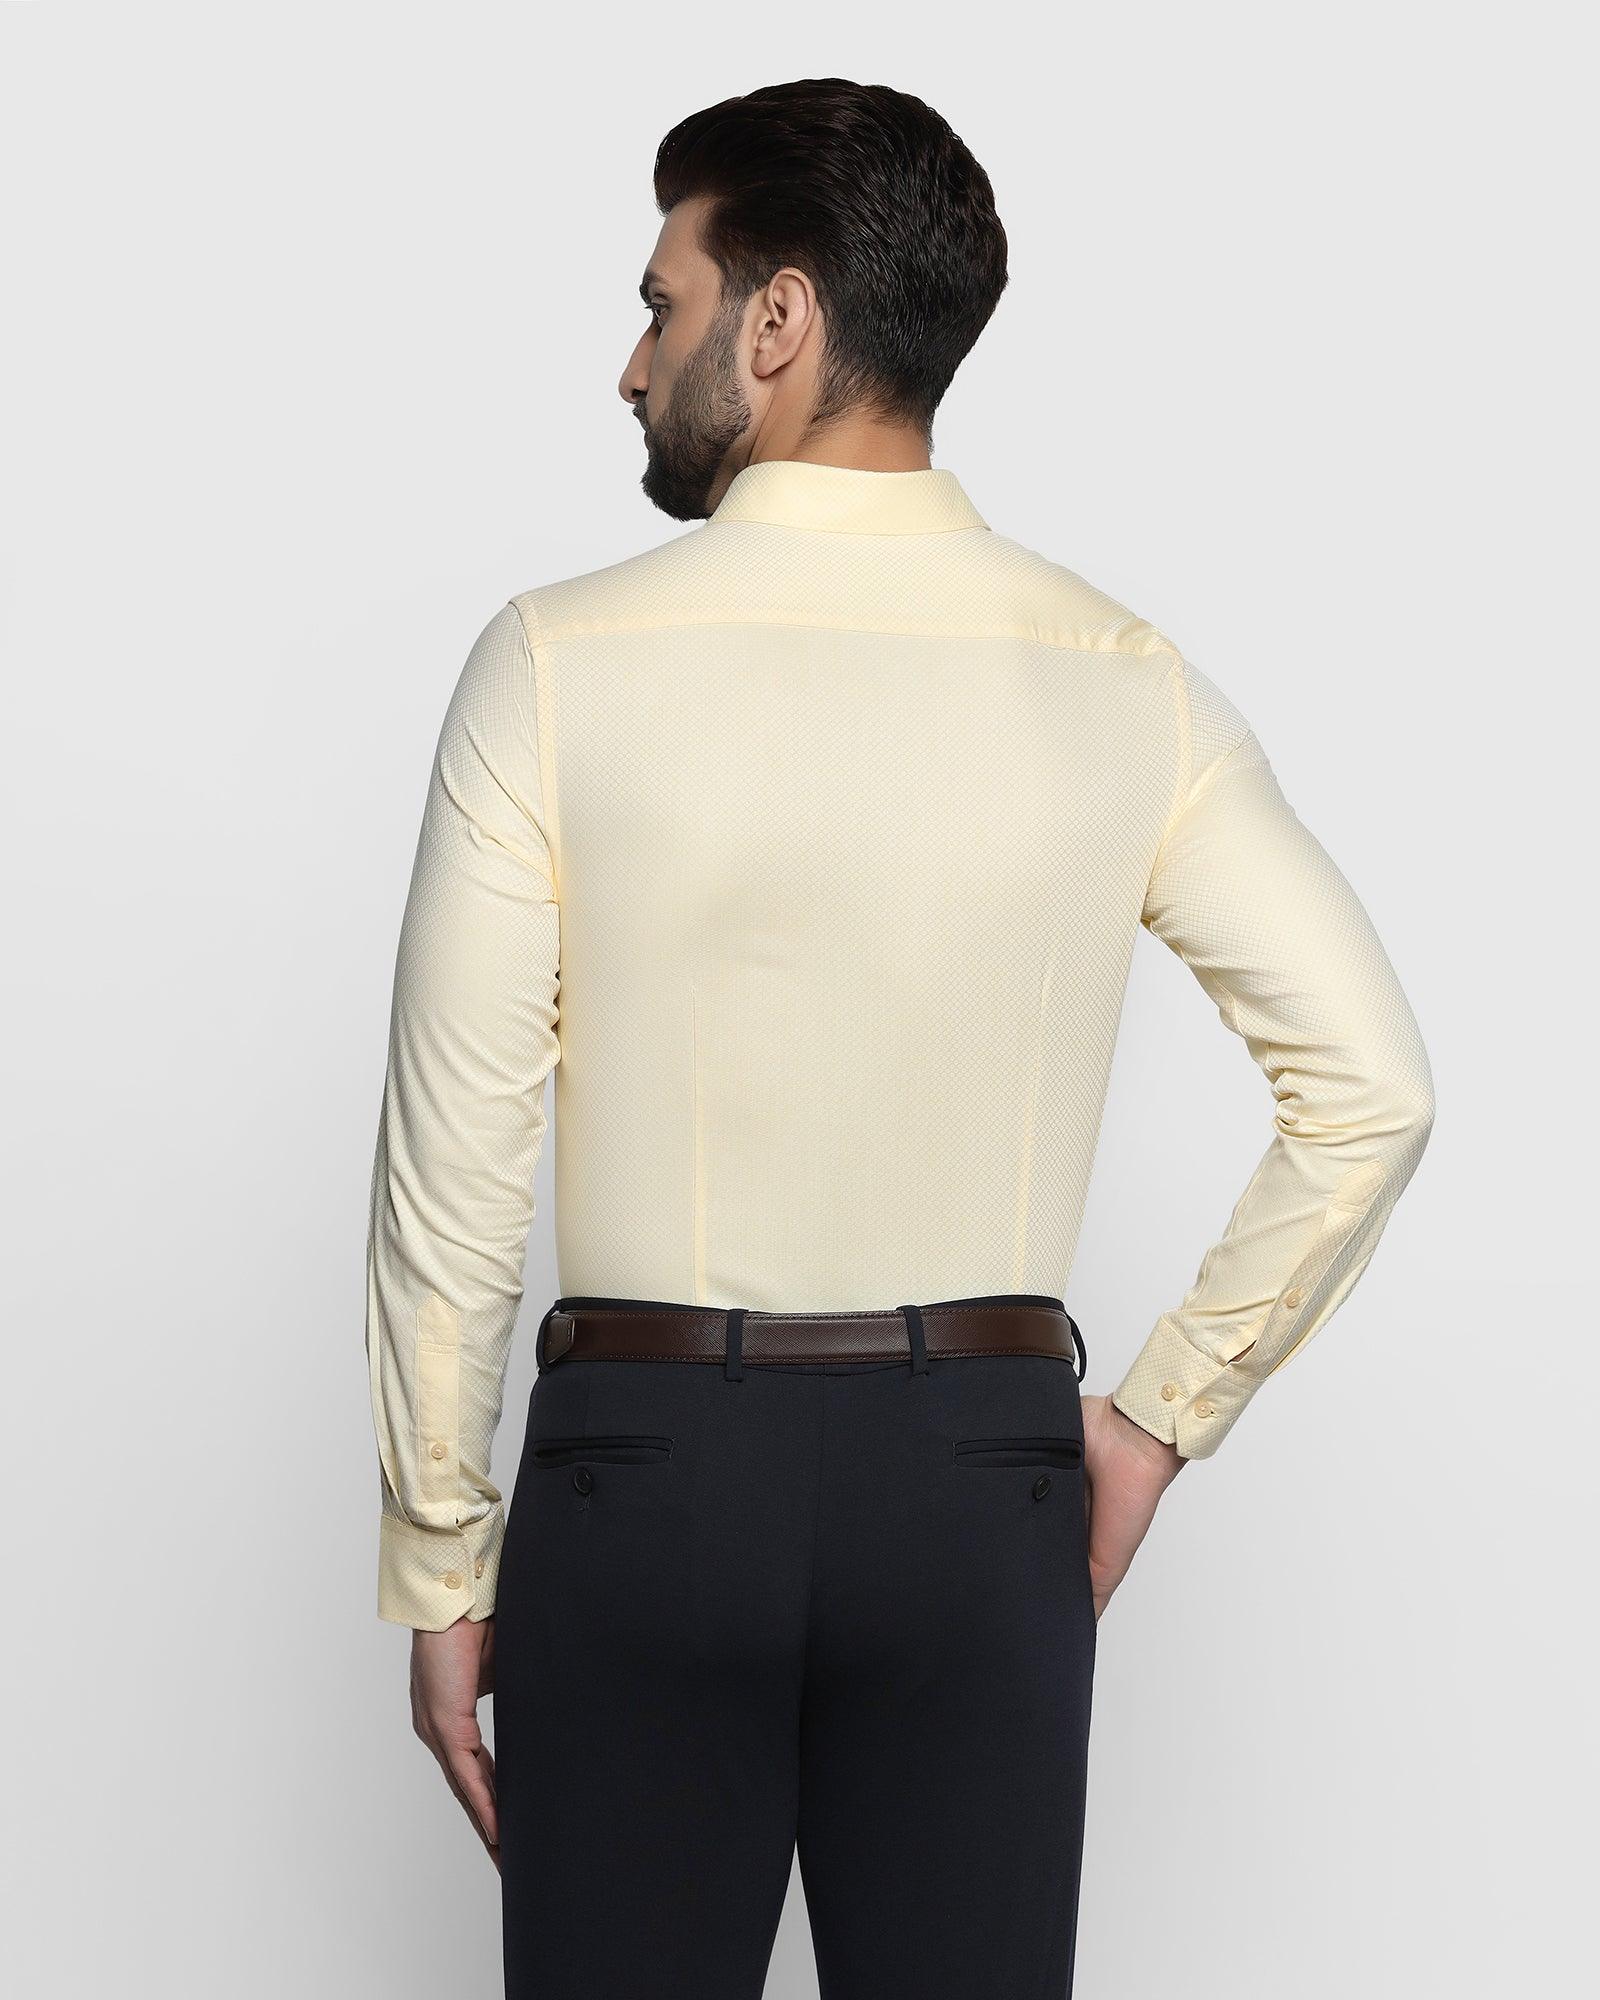 Formal Lemon Yellow Textured Shirt - Series